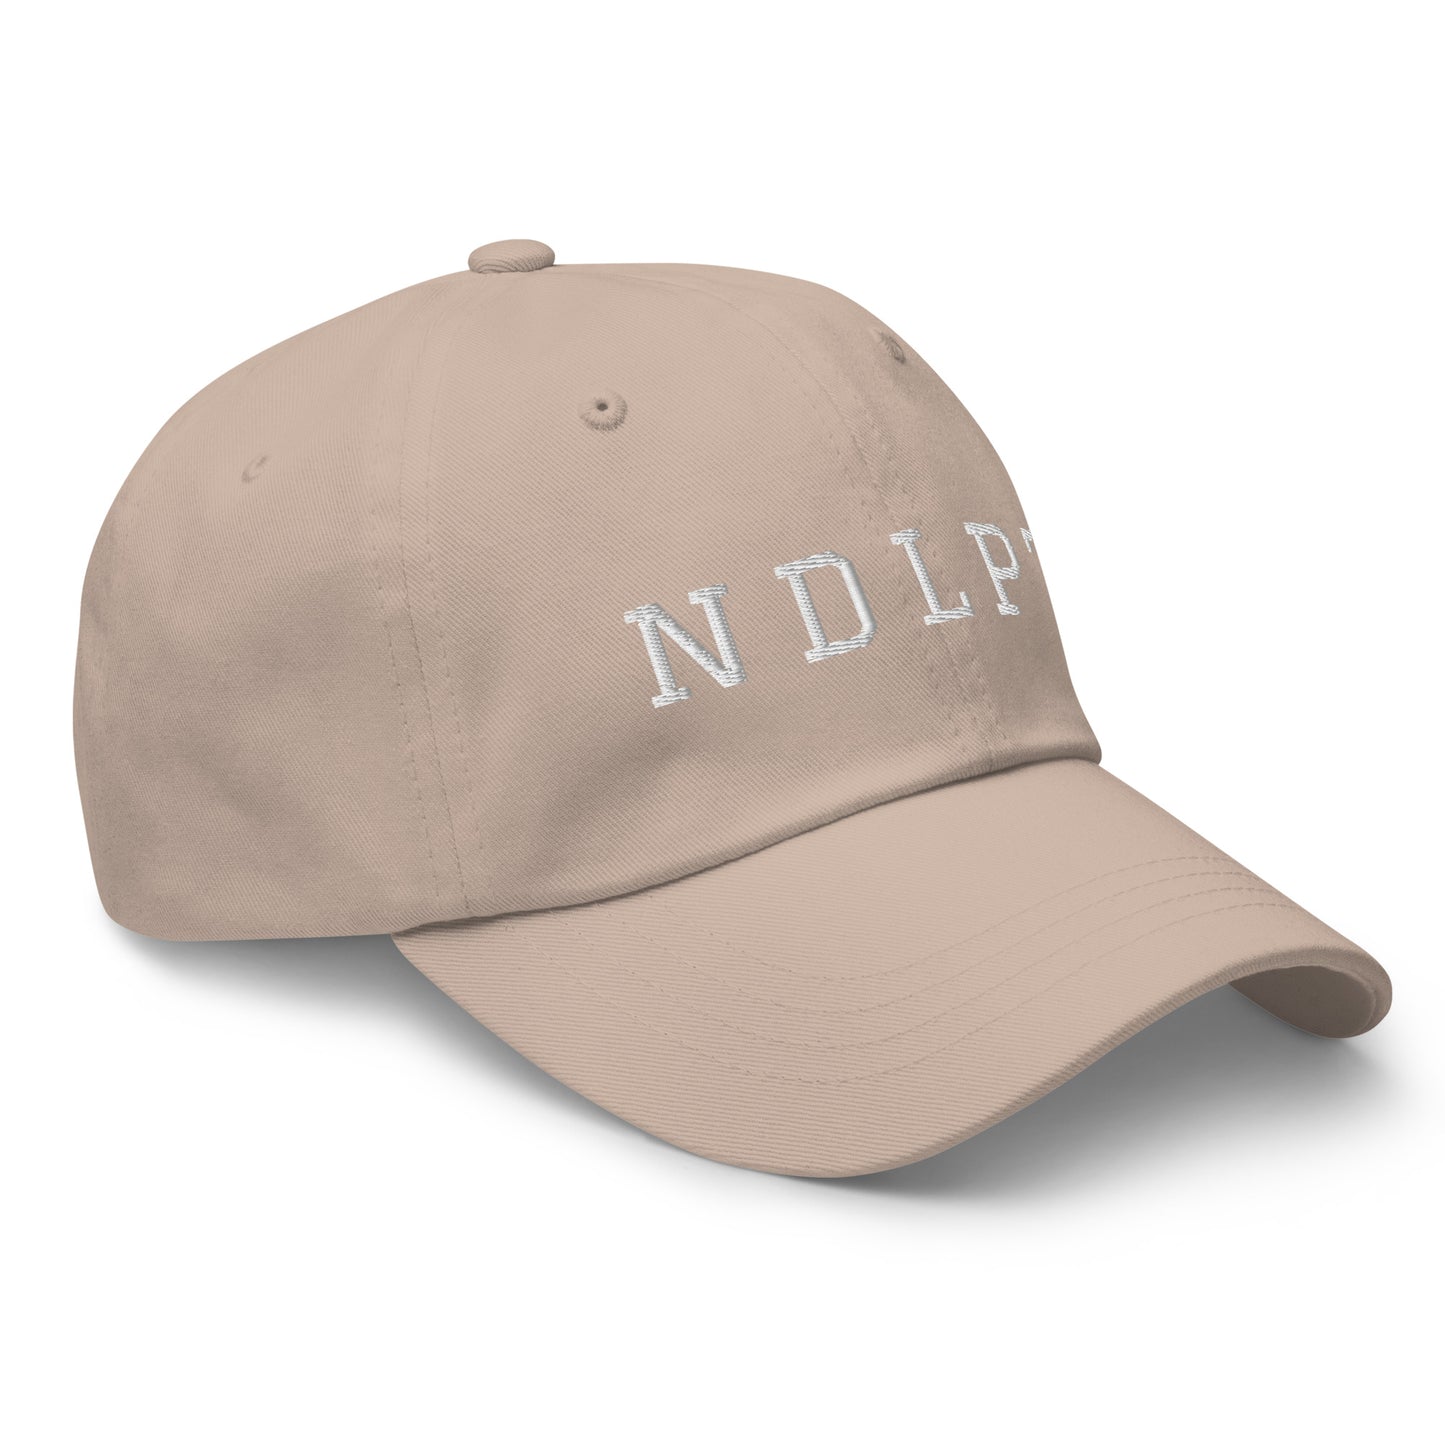 NDLPT Hat